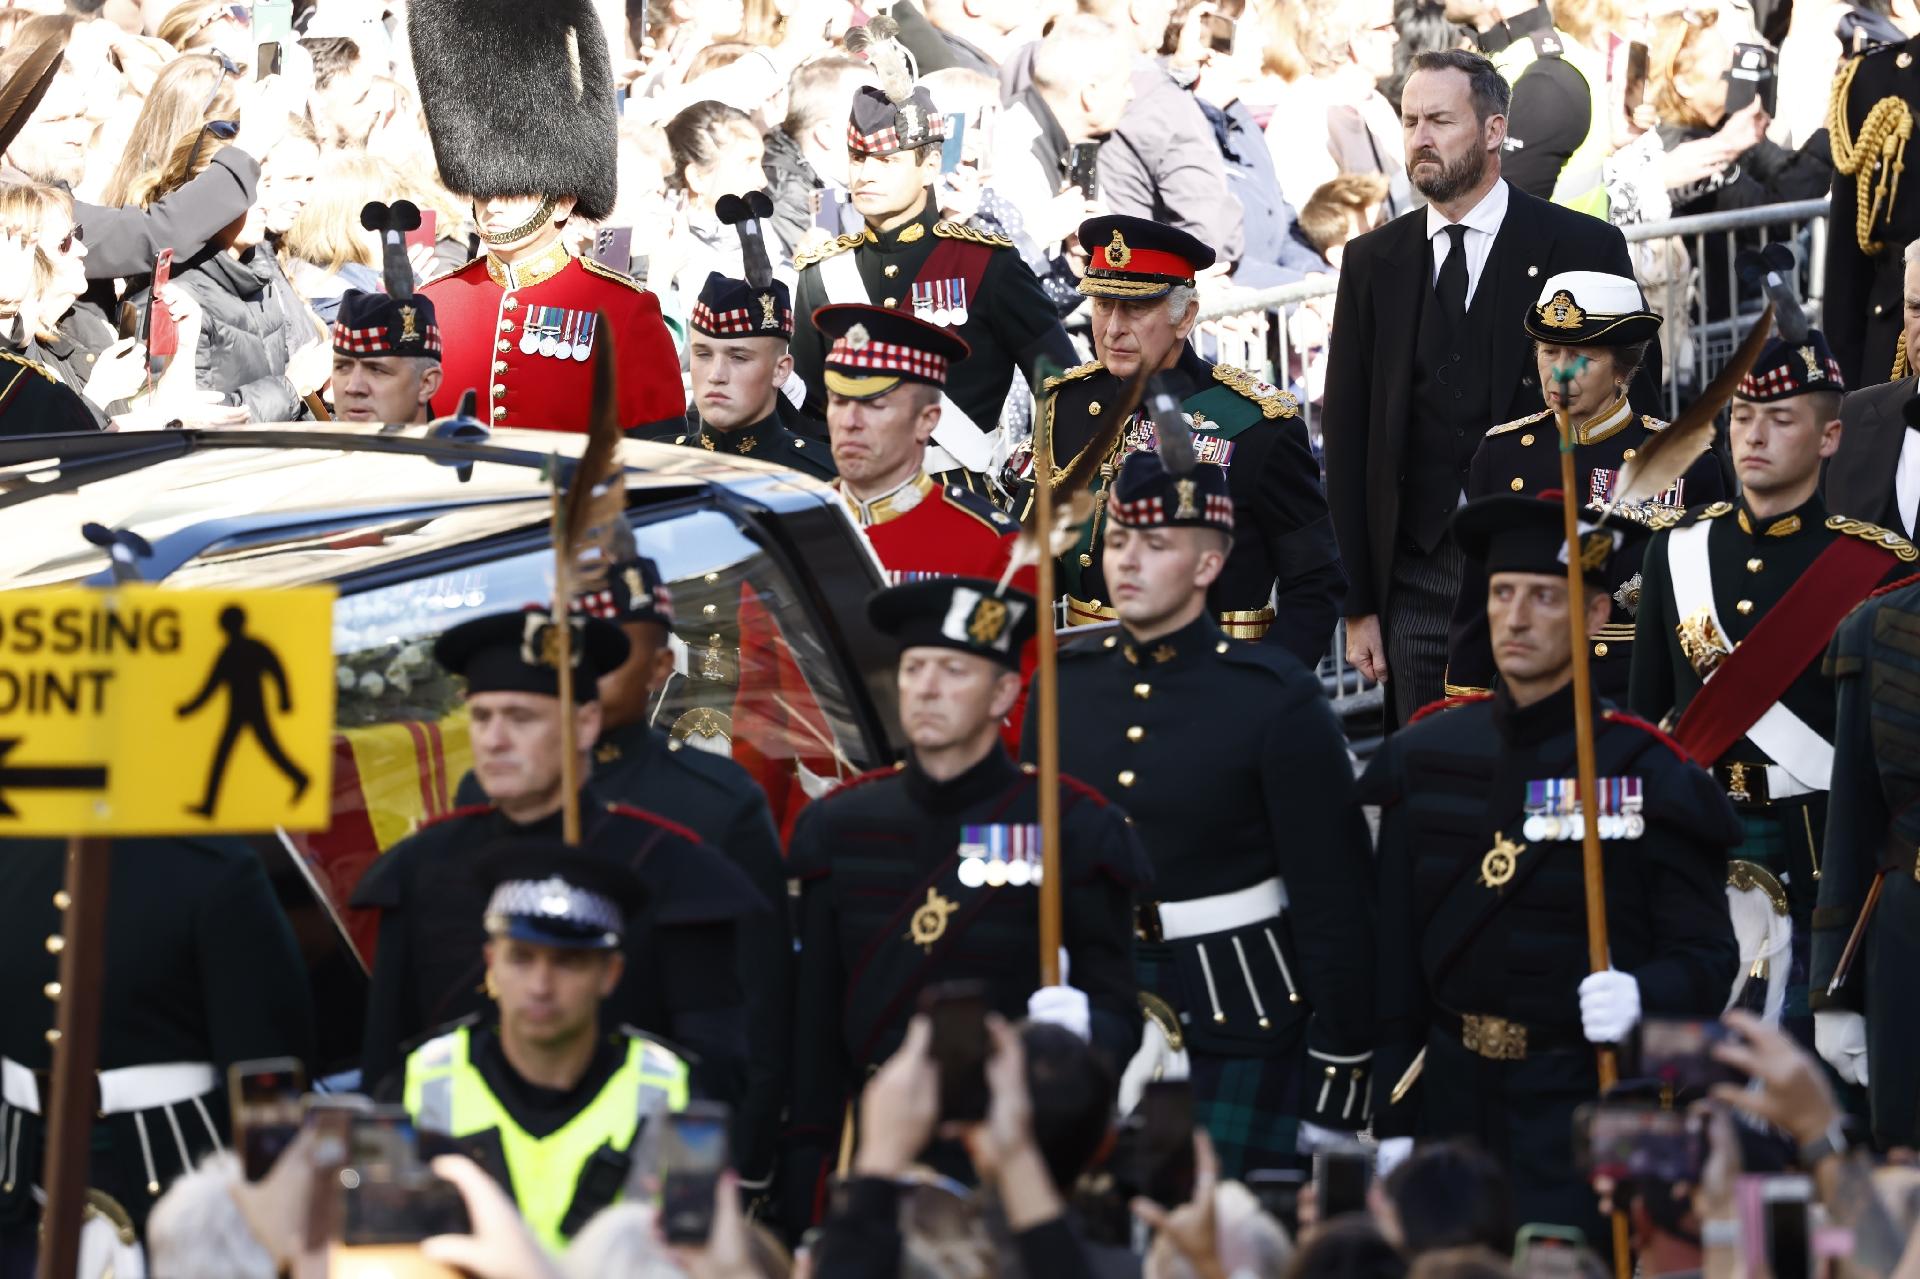     Reina Isabel: el cadáver del rey sale en procesión - Jeff J. Mitchell / Getty Images